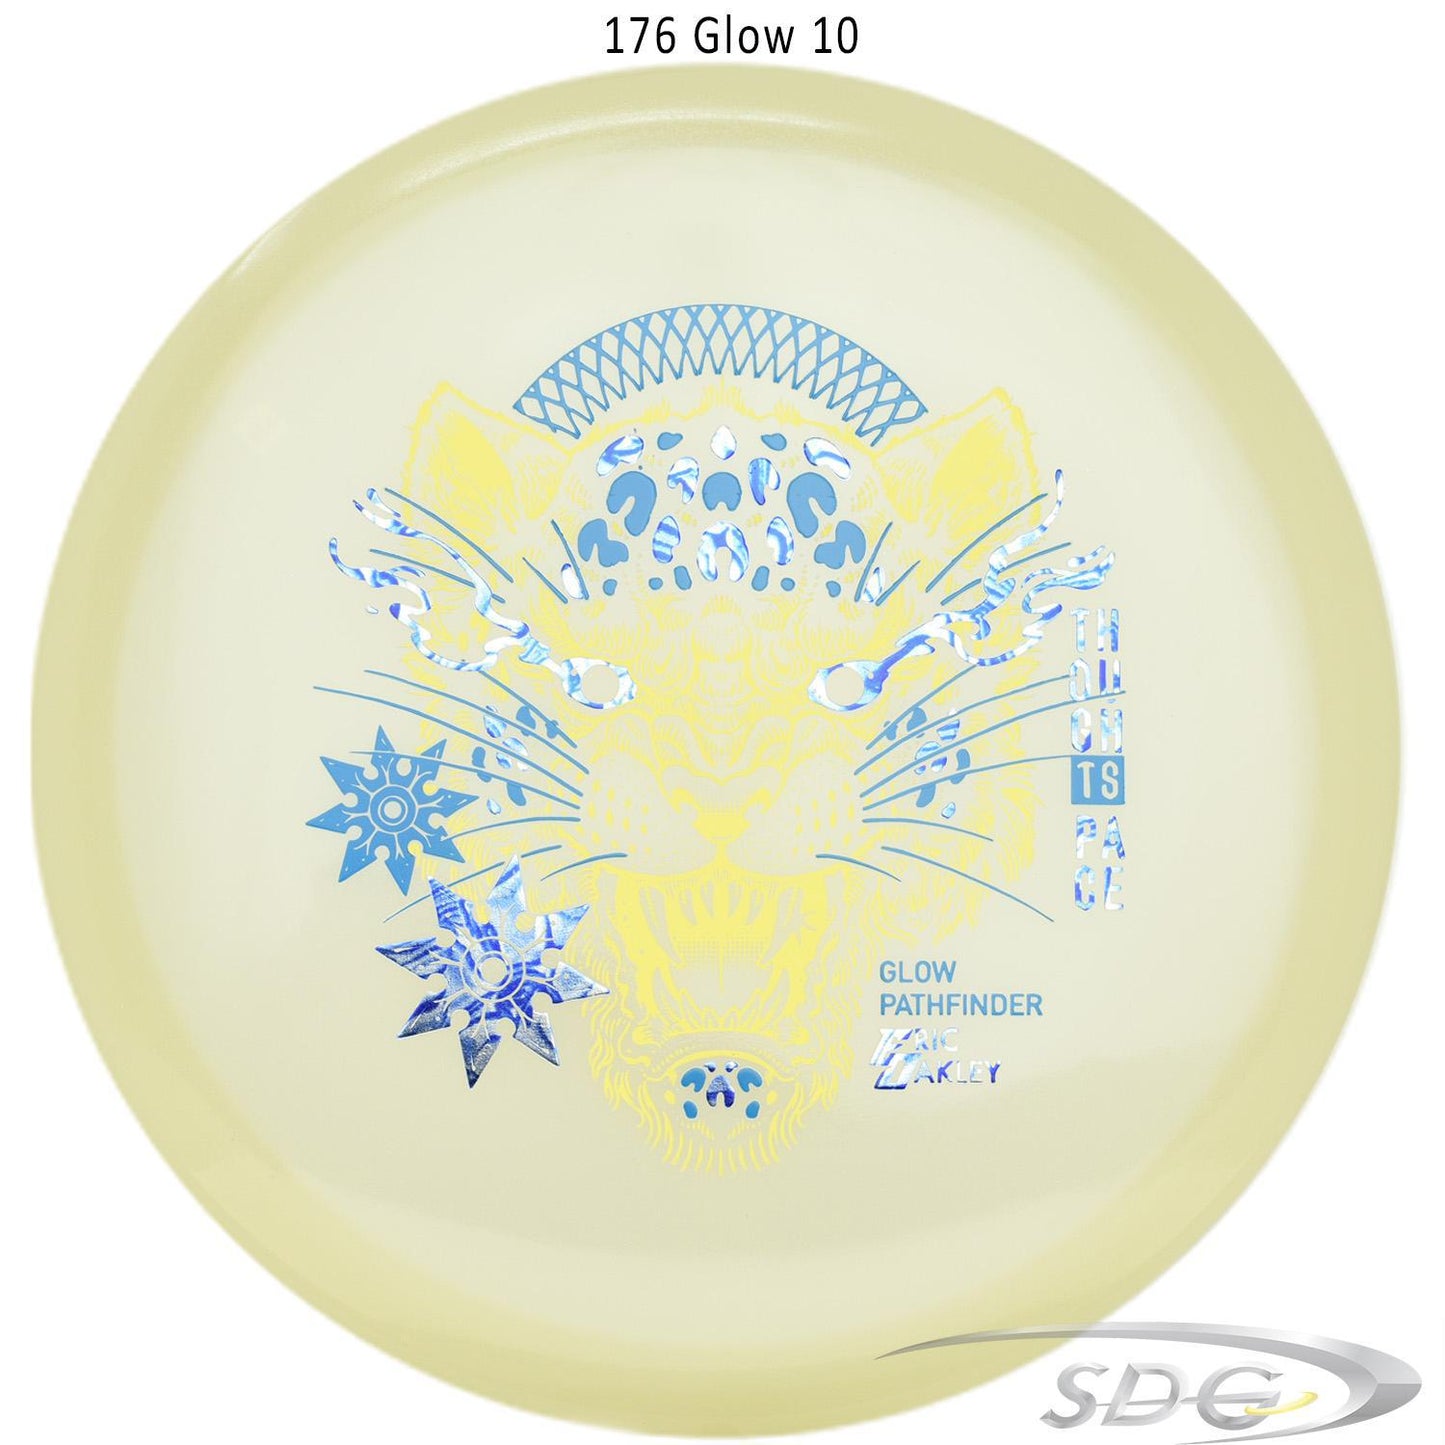 tsa-glow-pathfinder-eric-oakley-snow-leopard-disc-golf-mid-range 176 Glow 10 